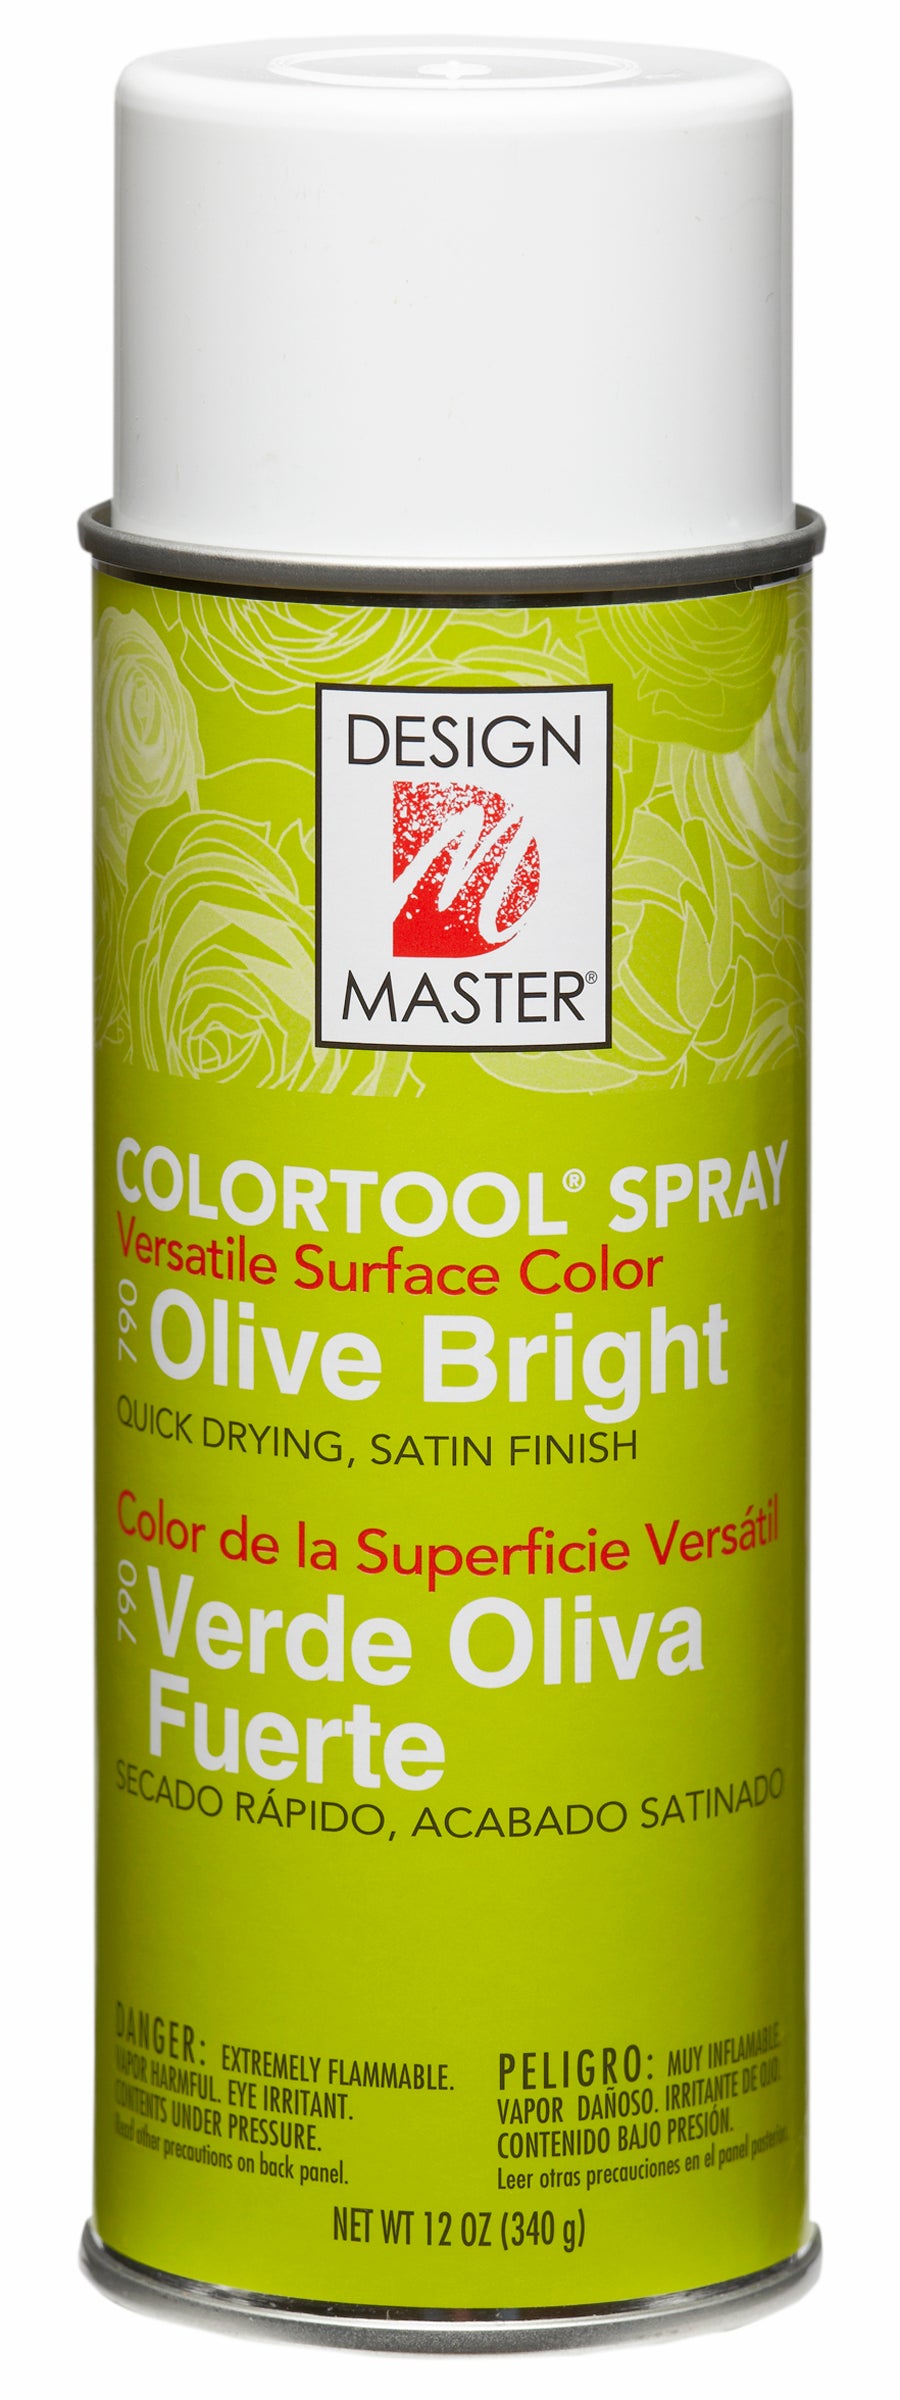 Design Master Colortool Spray-Olive Bright